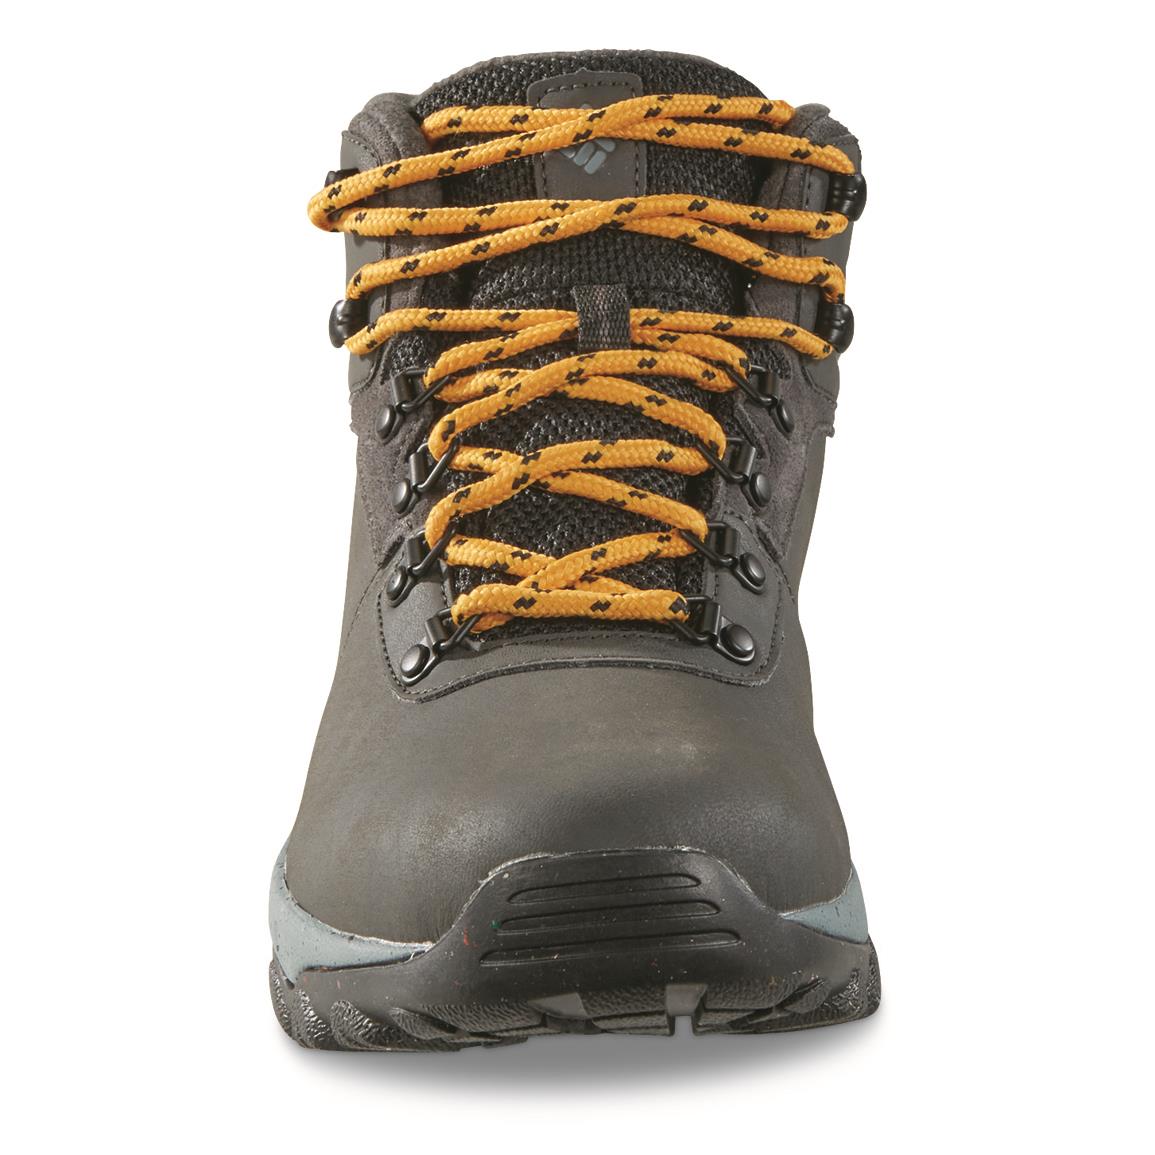 Columbia Men's Granite Trail Waterproof Mid Hiking Boots - 733034 ...